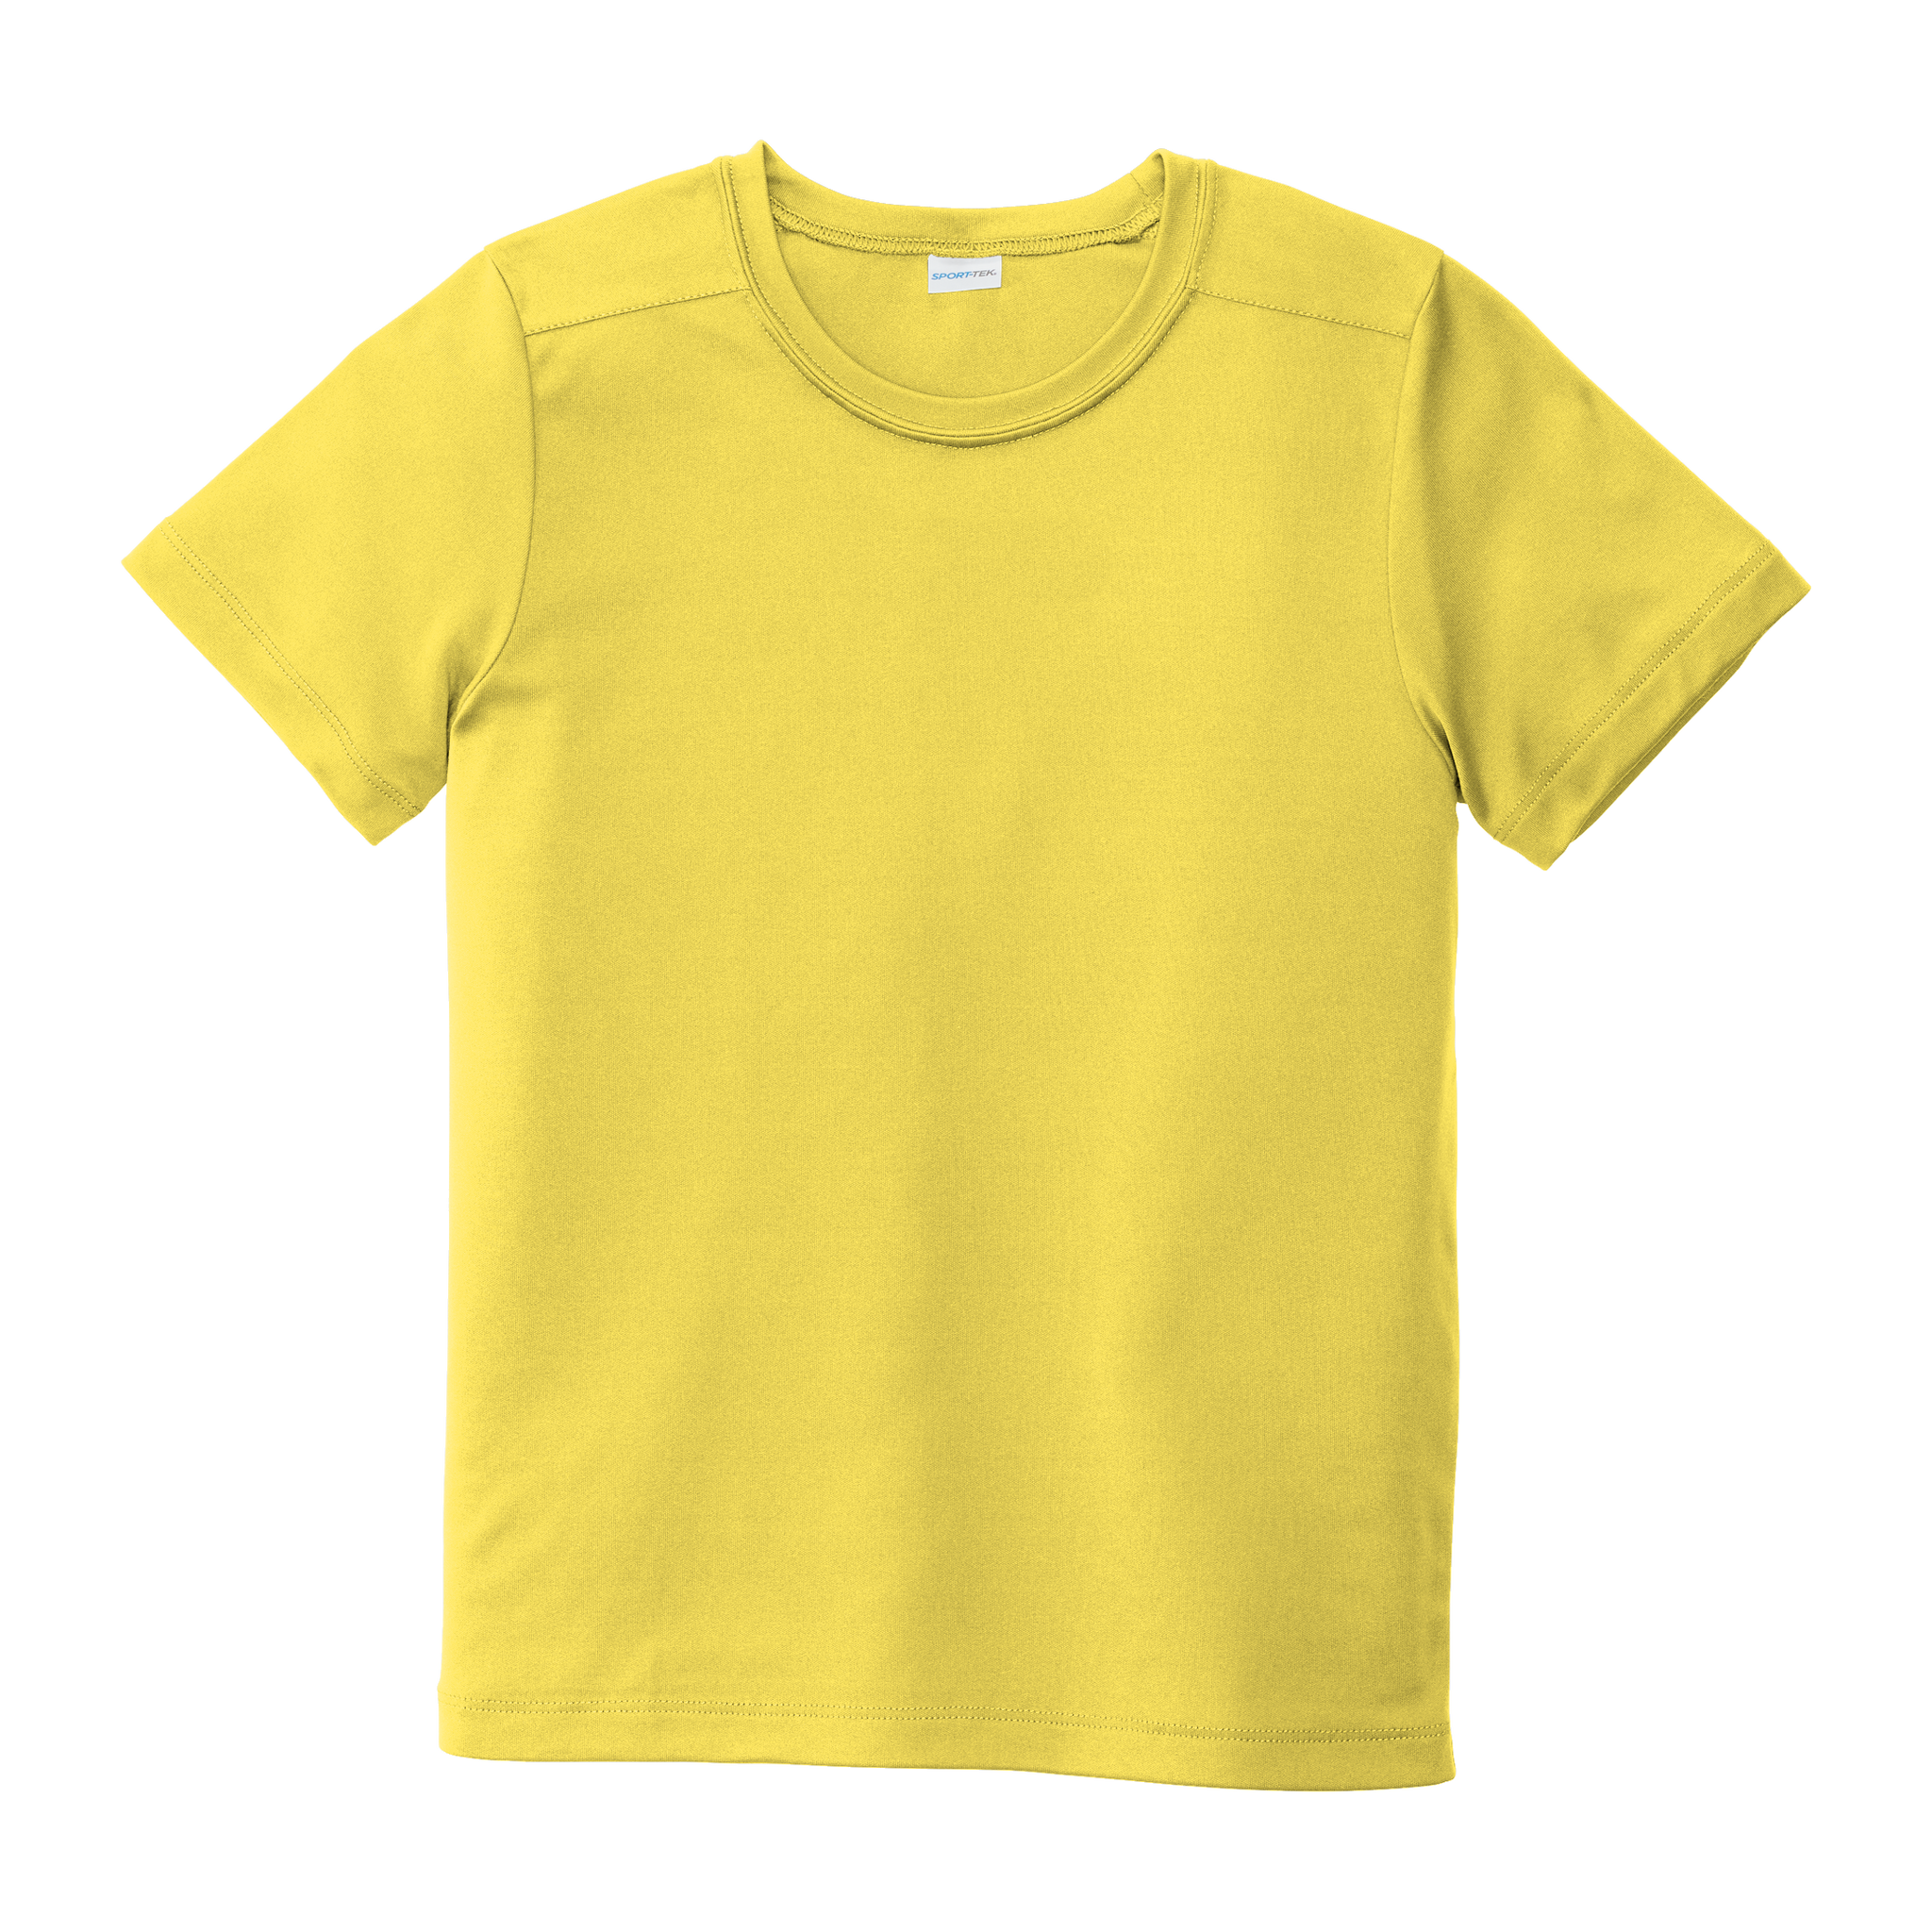 DY1974 Youth Short Sleeve Posi-UV Pro T-shirt